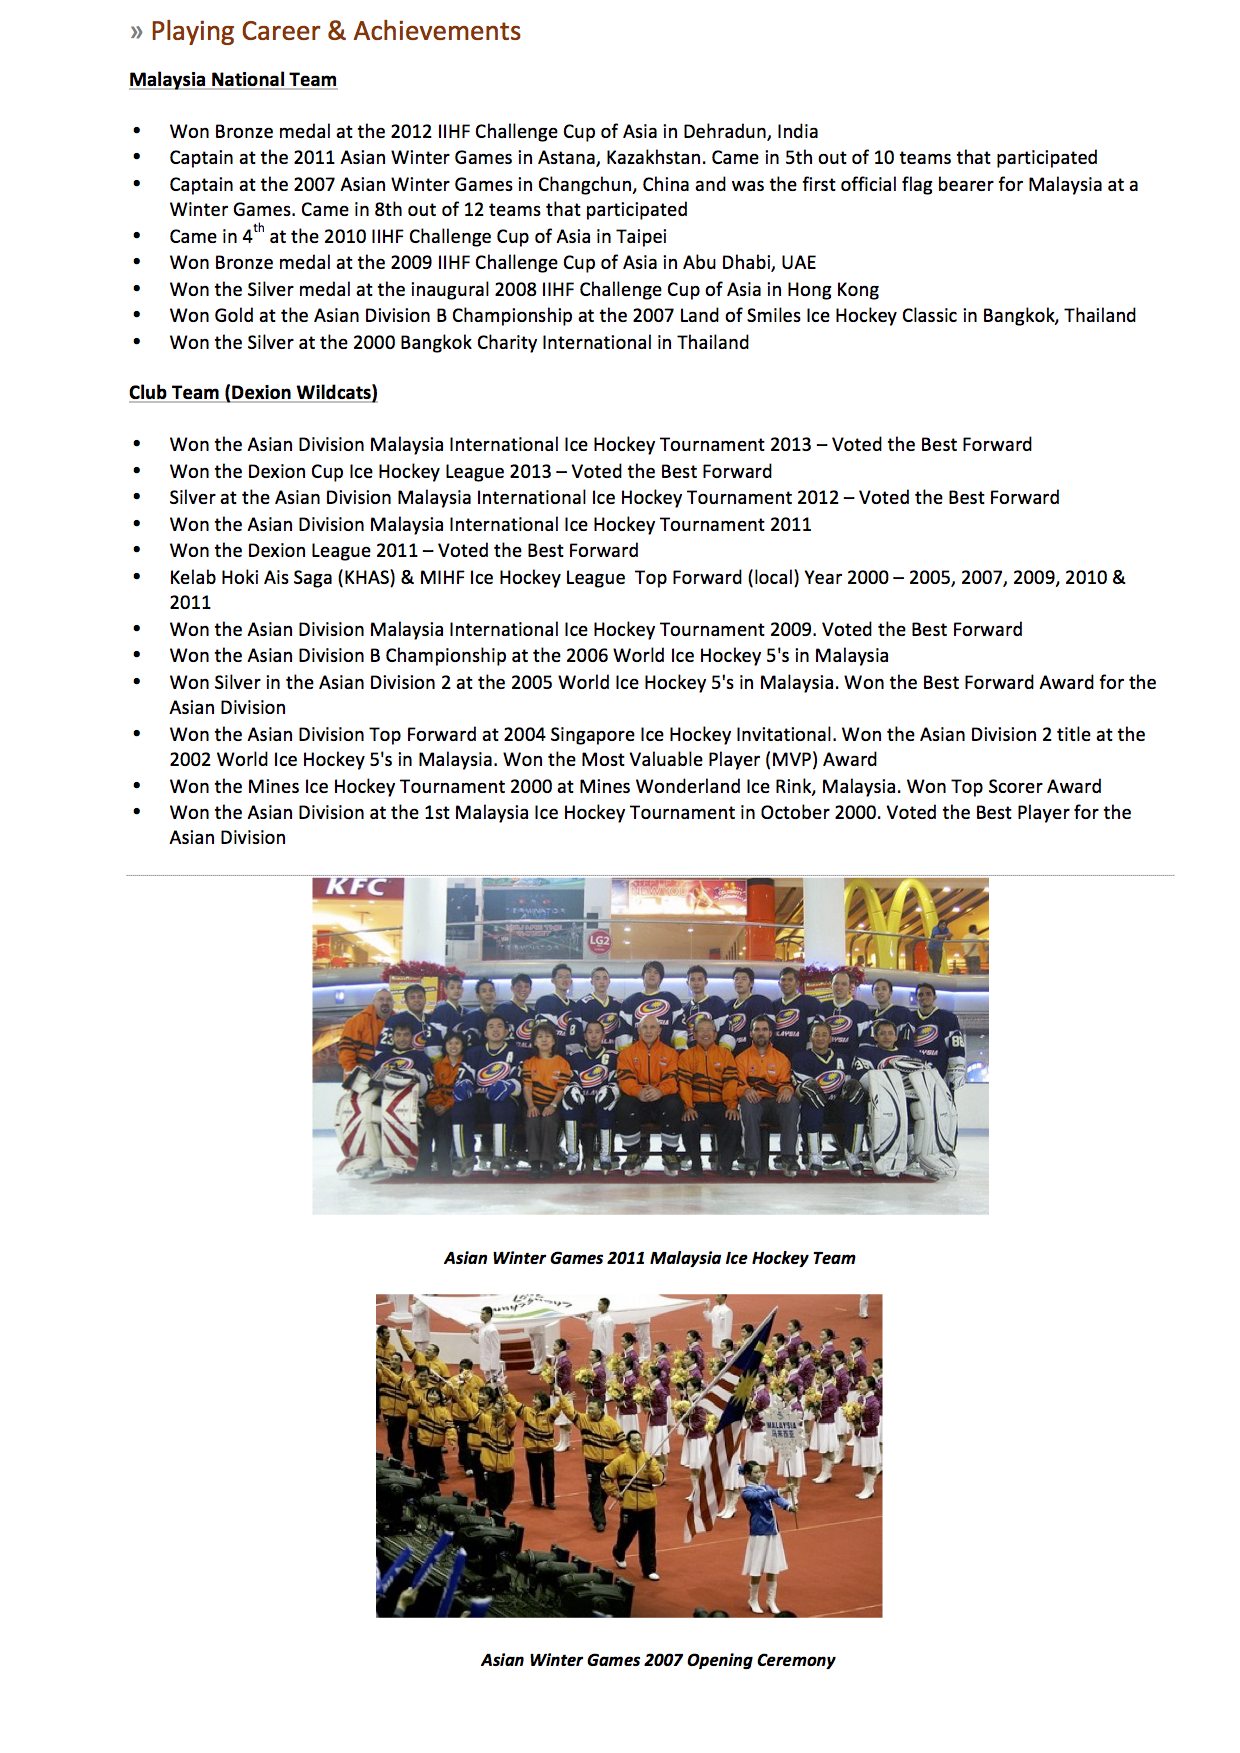 About Us | Gary Tan Ice Hockey Academy